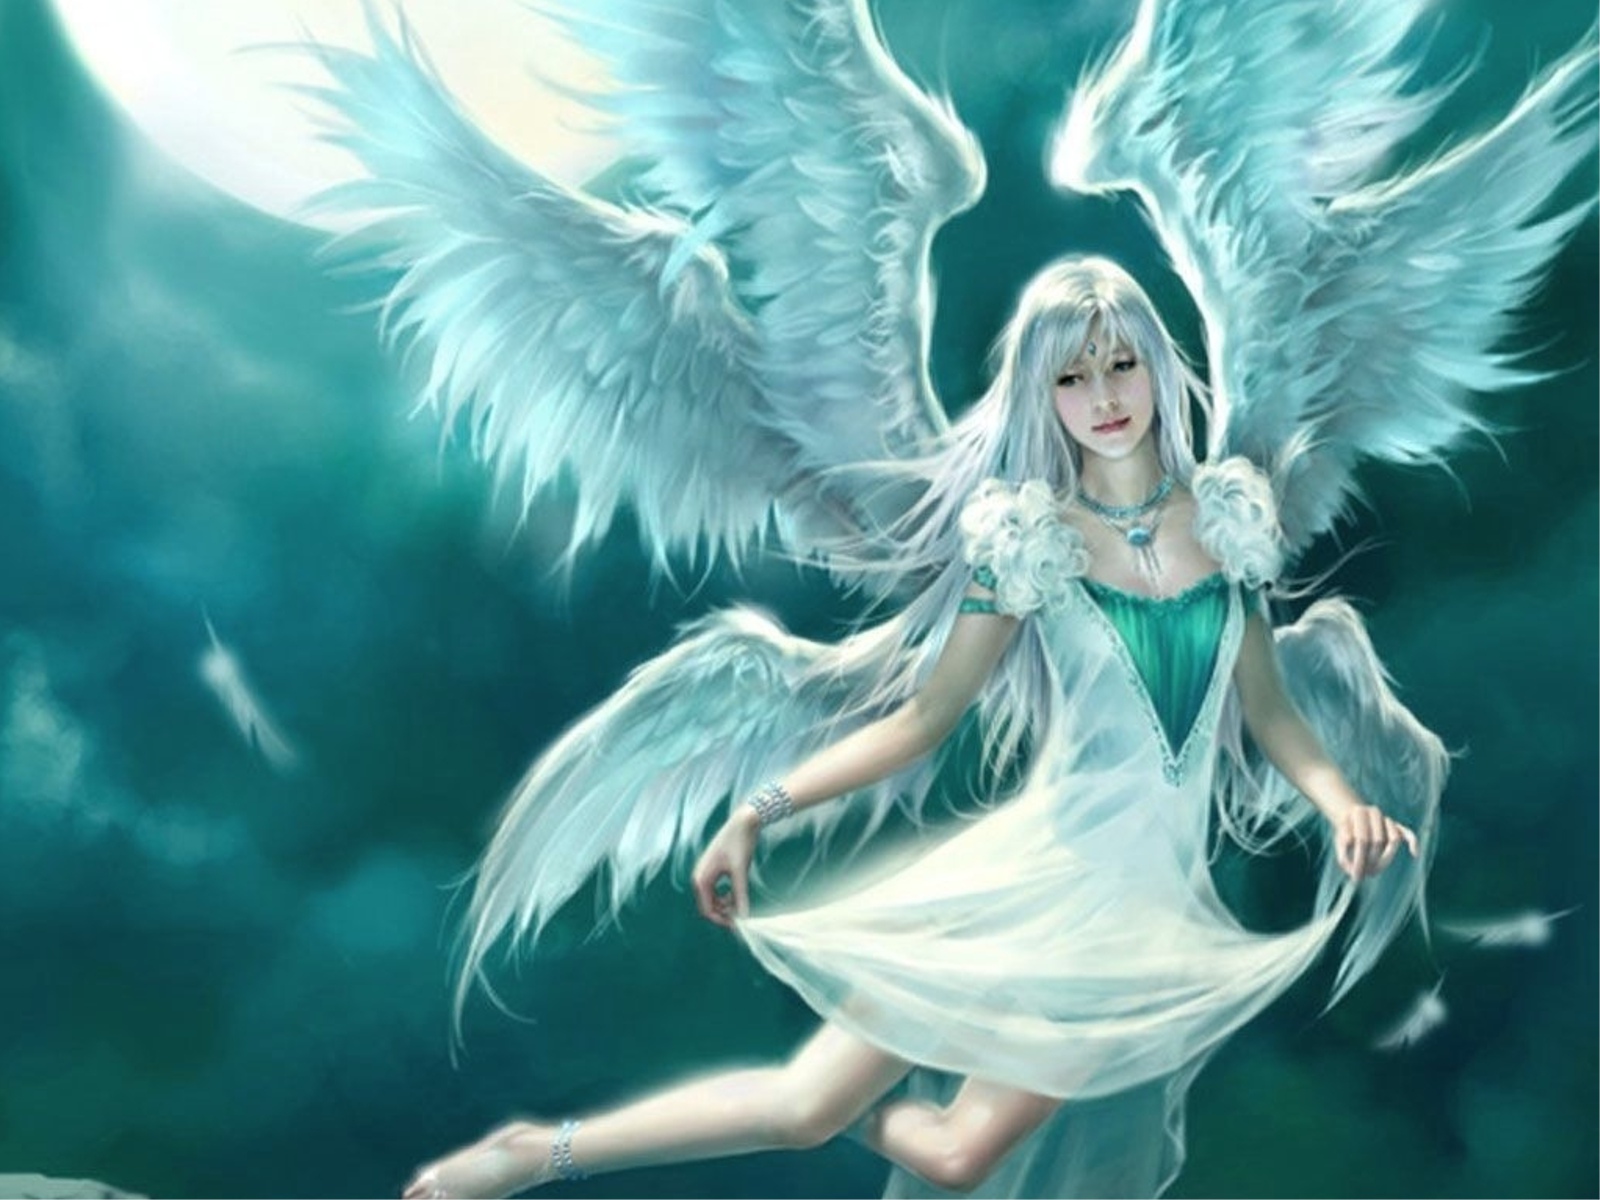 engel wallpaper,angel,cg artwork,fictional character,supernatural creature,mythology